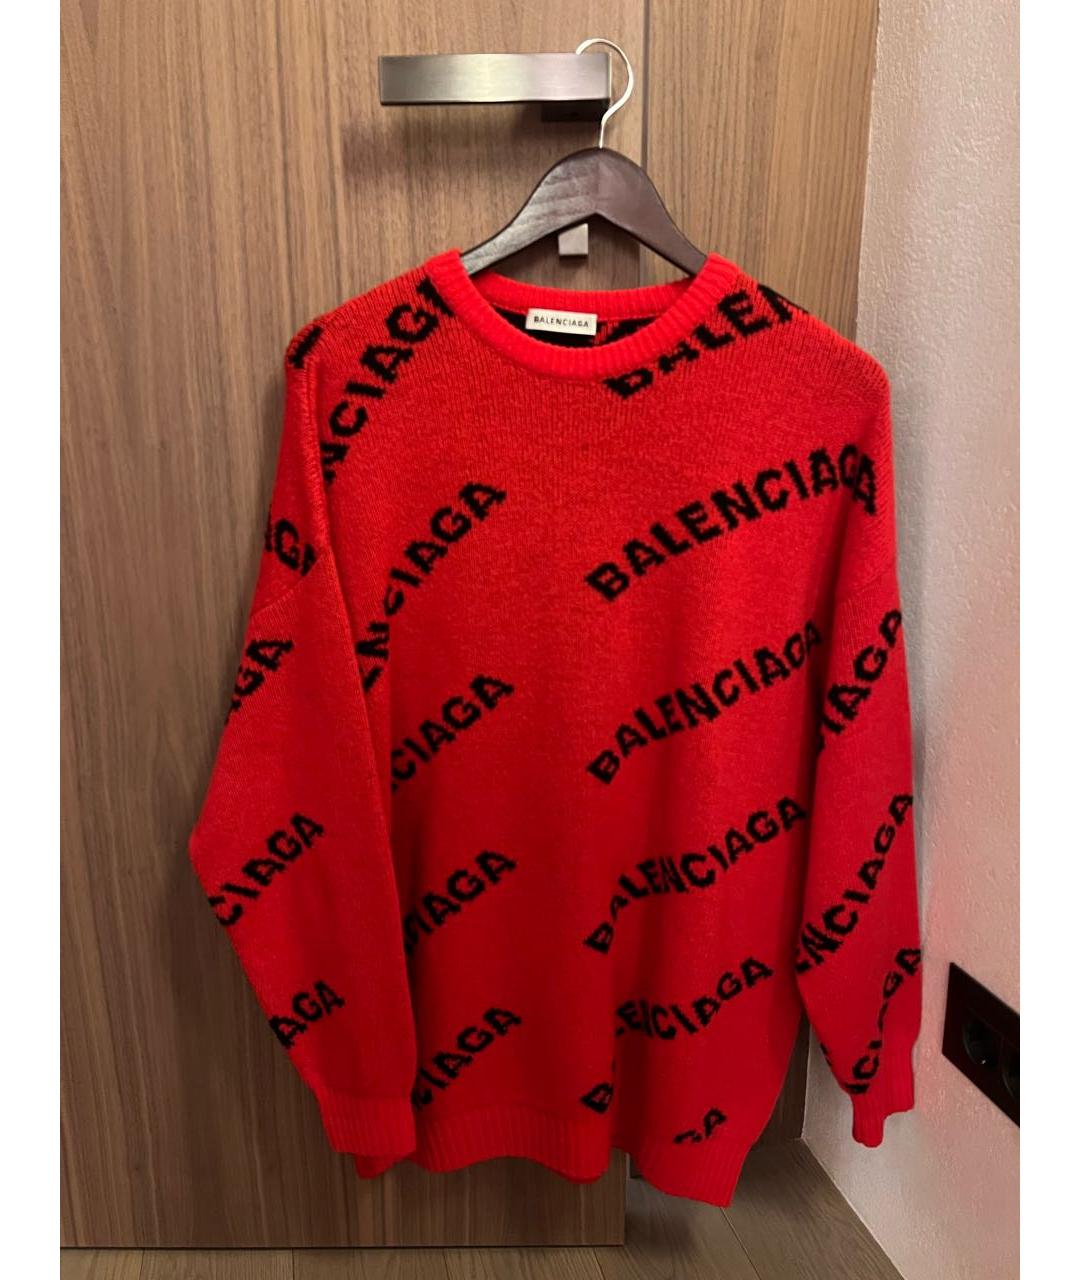 BALENCIAGA Красный шерстяной джемпер / свитер, фото 6